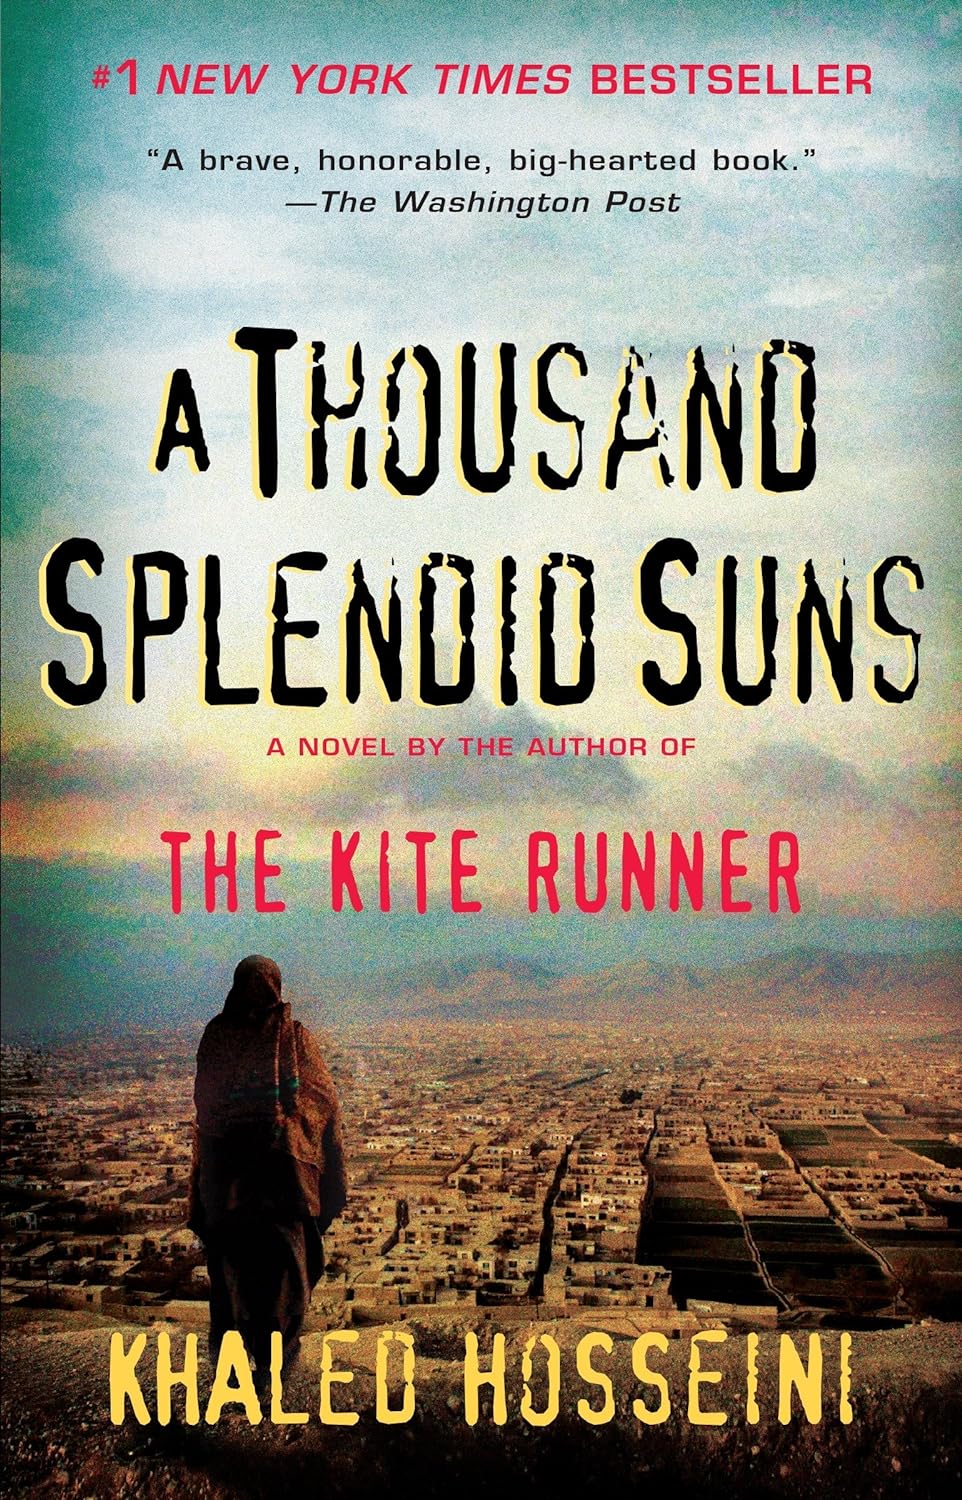 A Thousand Splendid Suns by Khaled Hosseini (Original Paperback)